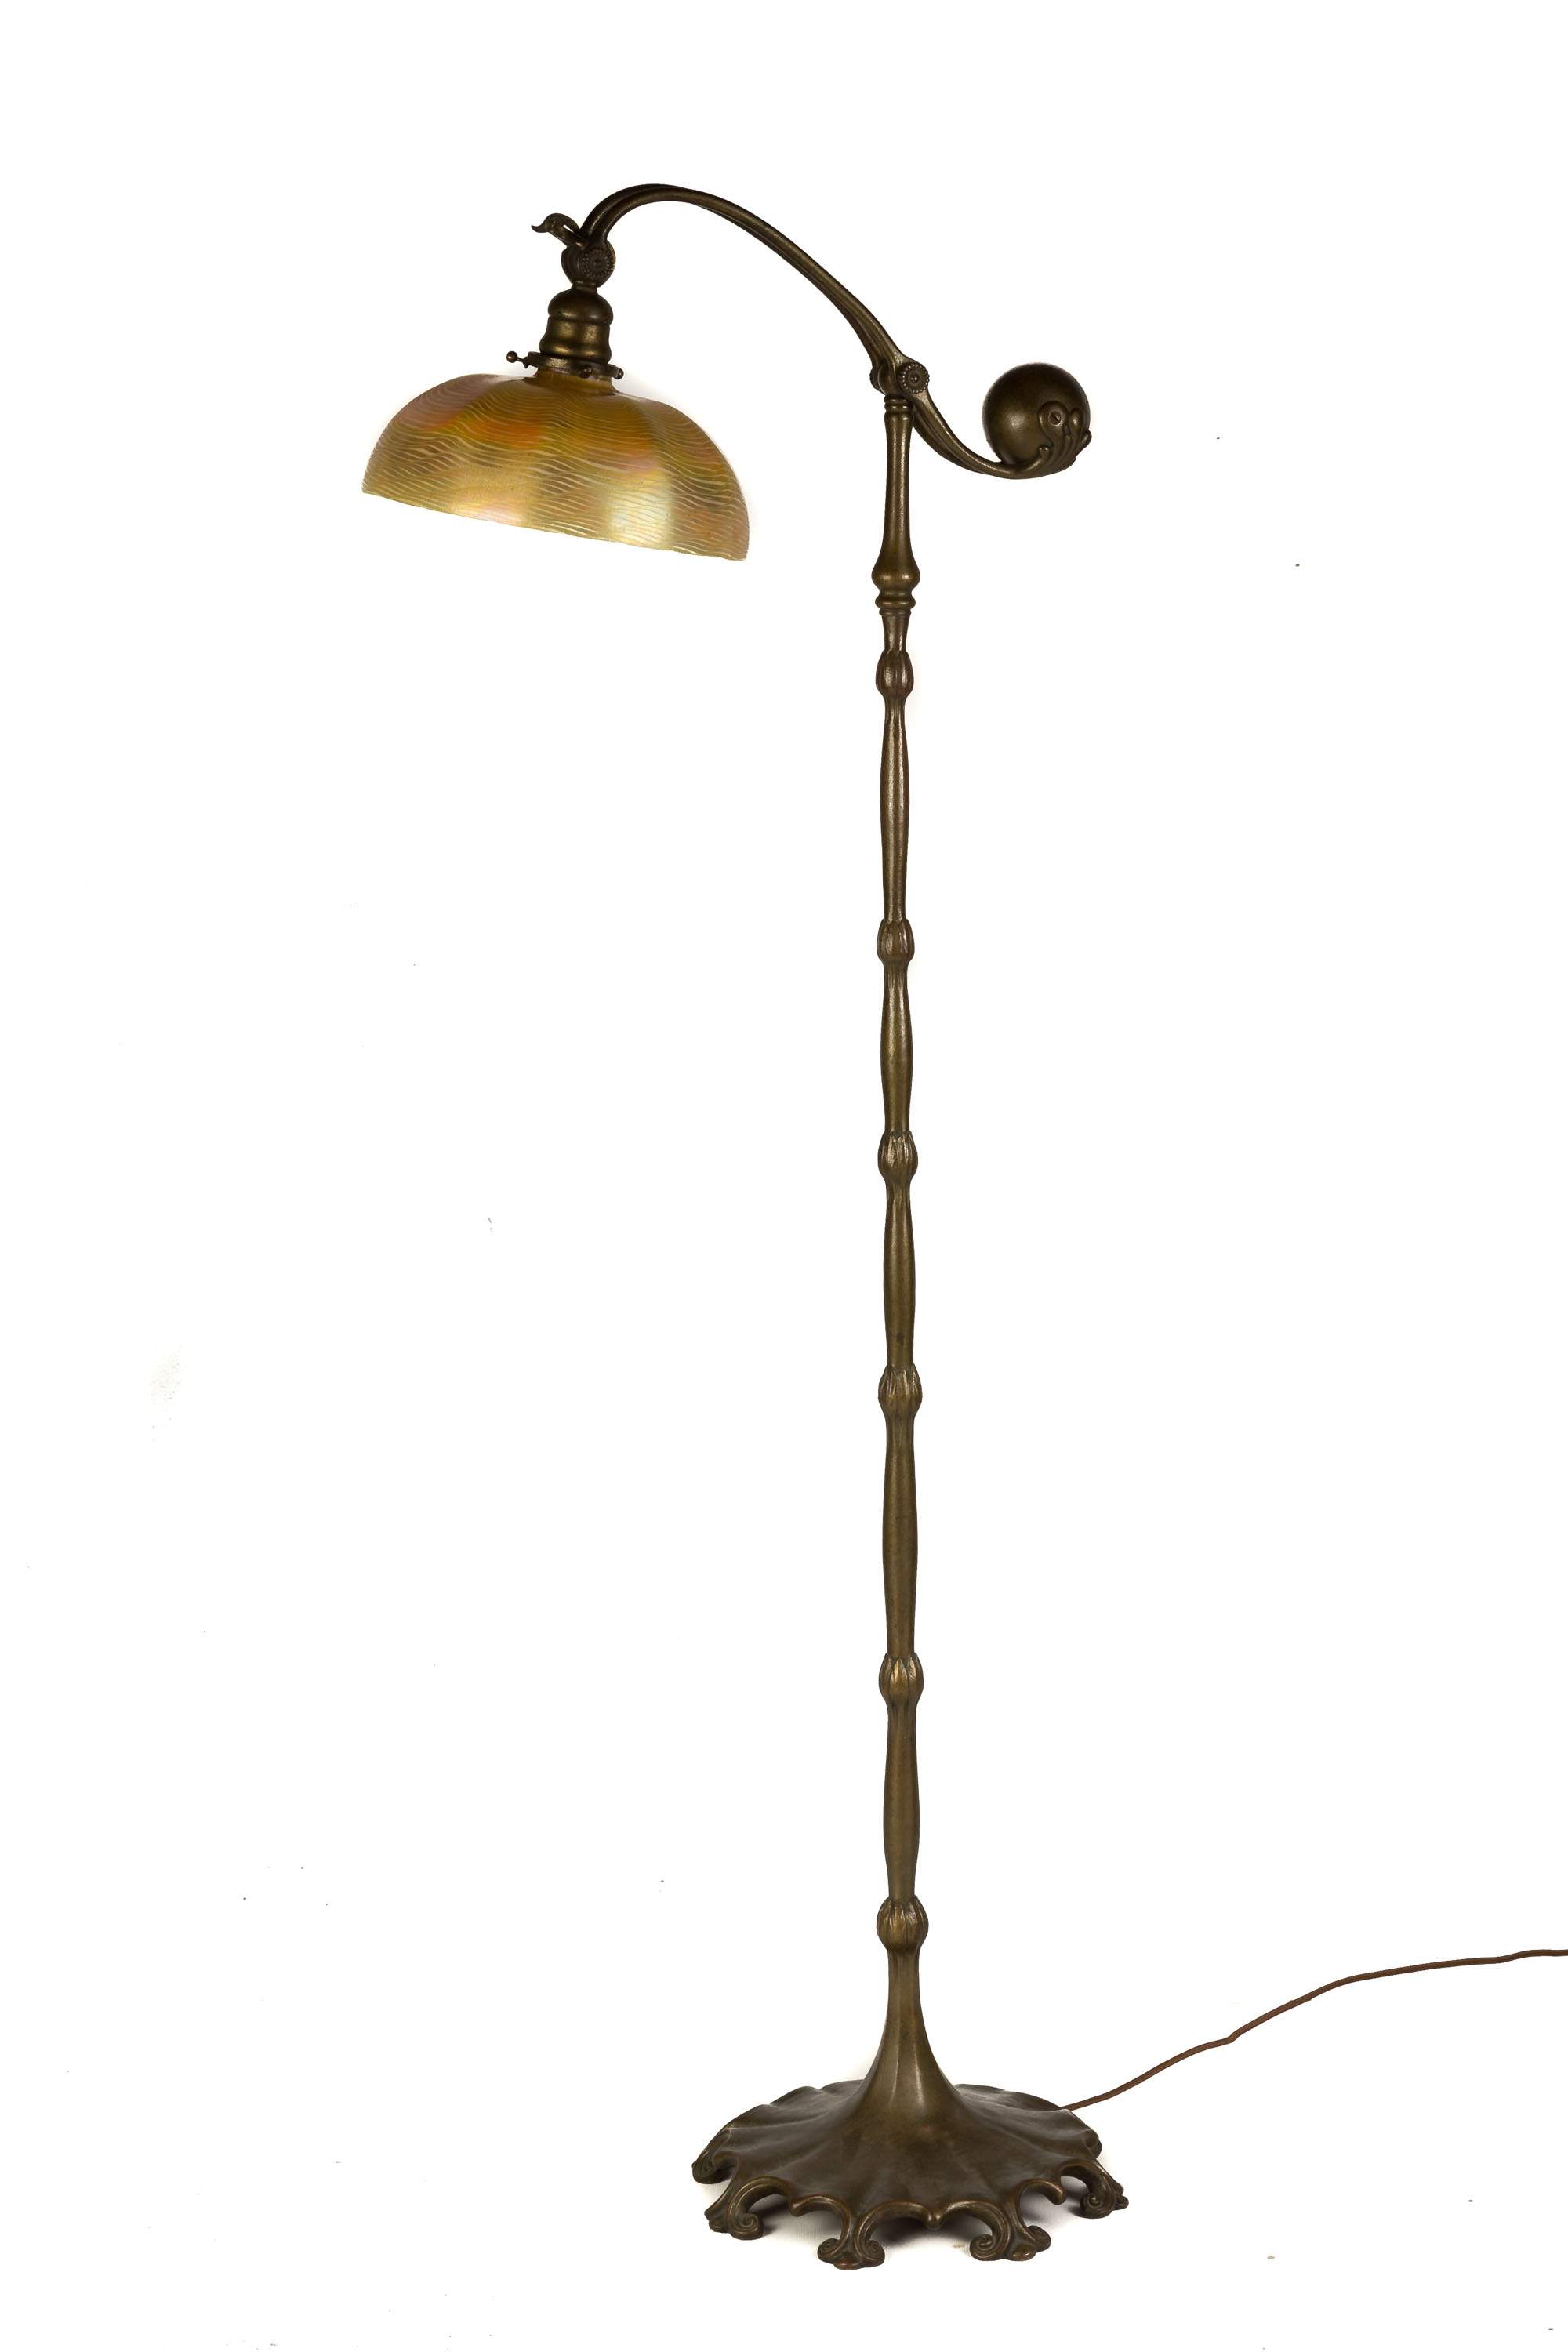 Tiffany Studios, New York, Bronze Counter Balance Floor Lamp with ...